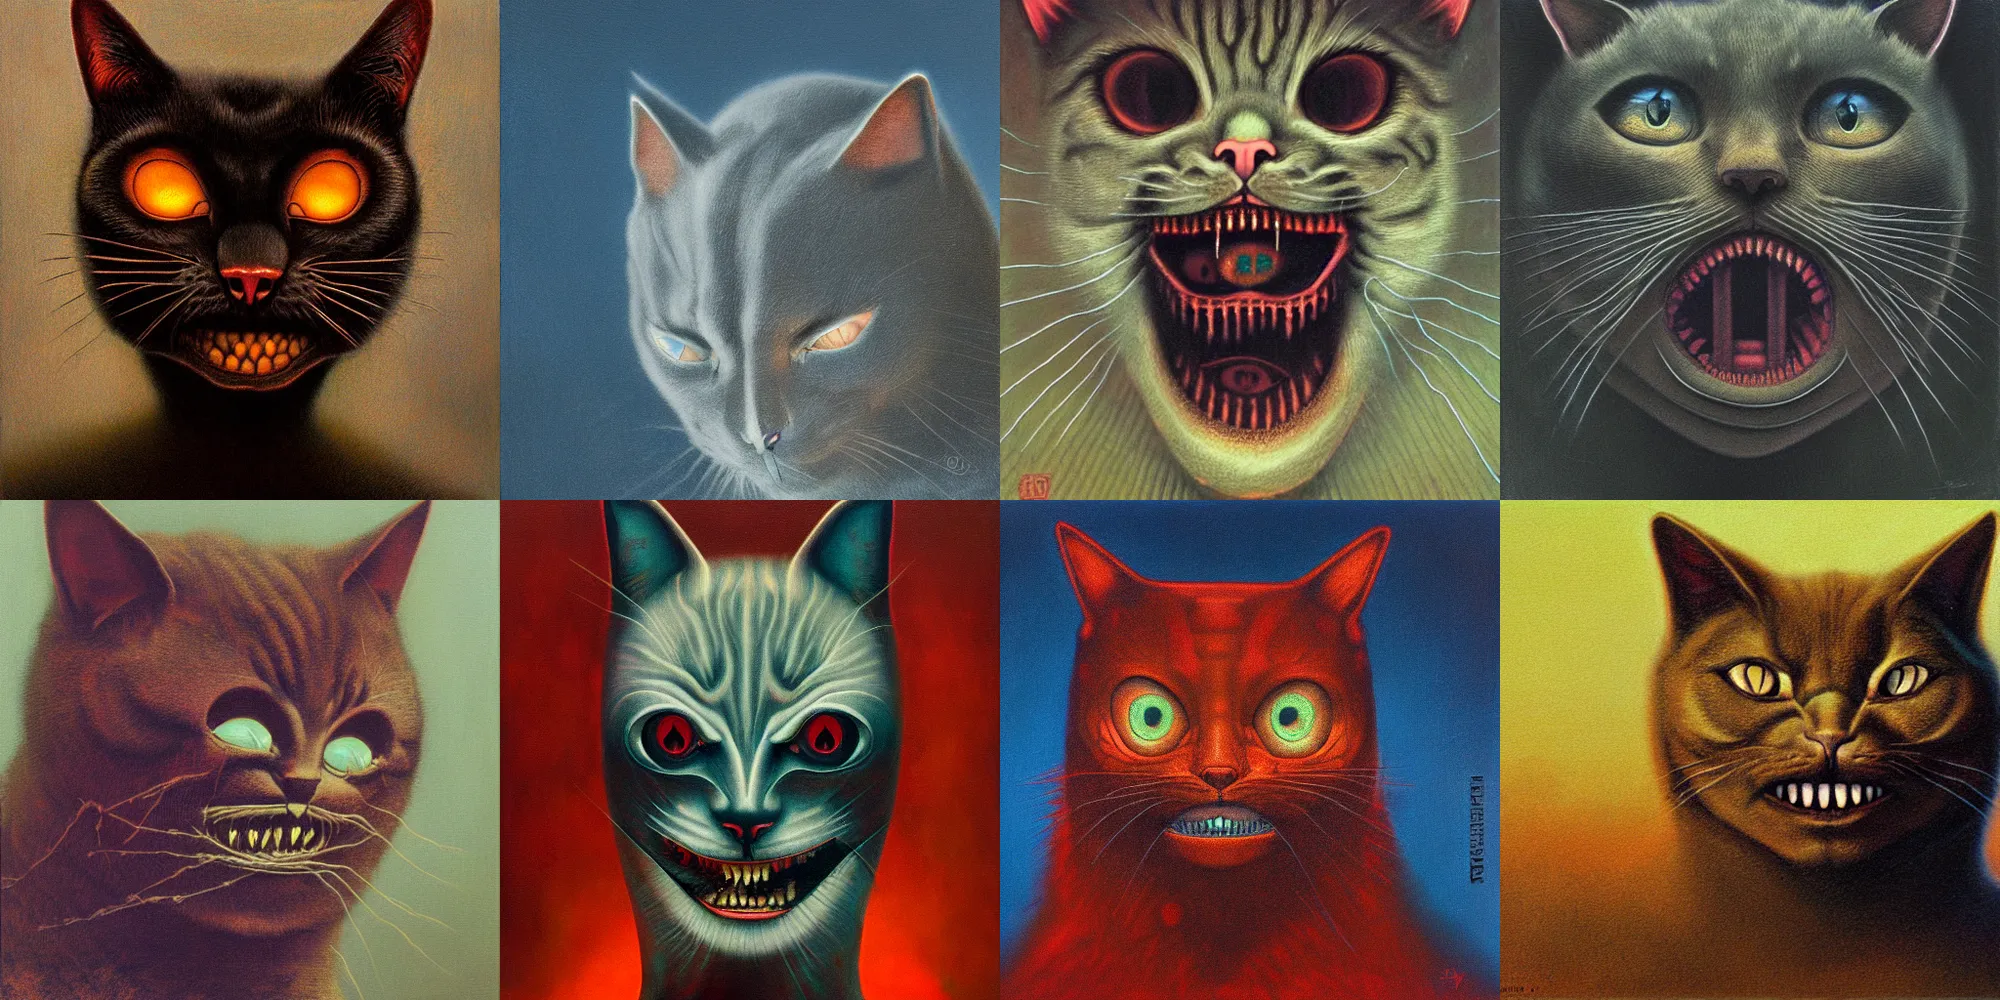 Prompt: grinning evil cat, HD, in style of beksinski, film grain, medium format, 8k resolution, oil on canvas